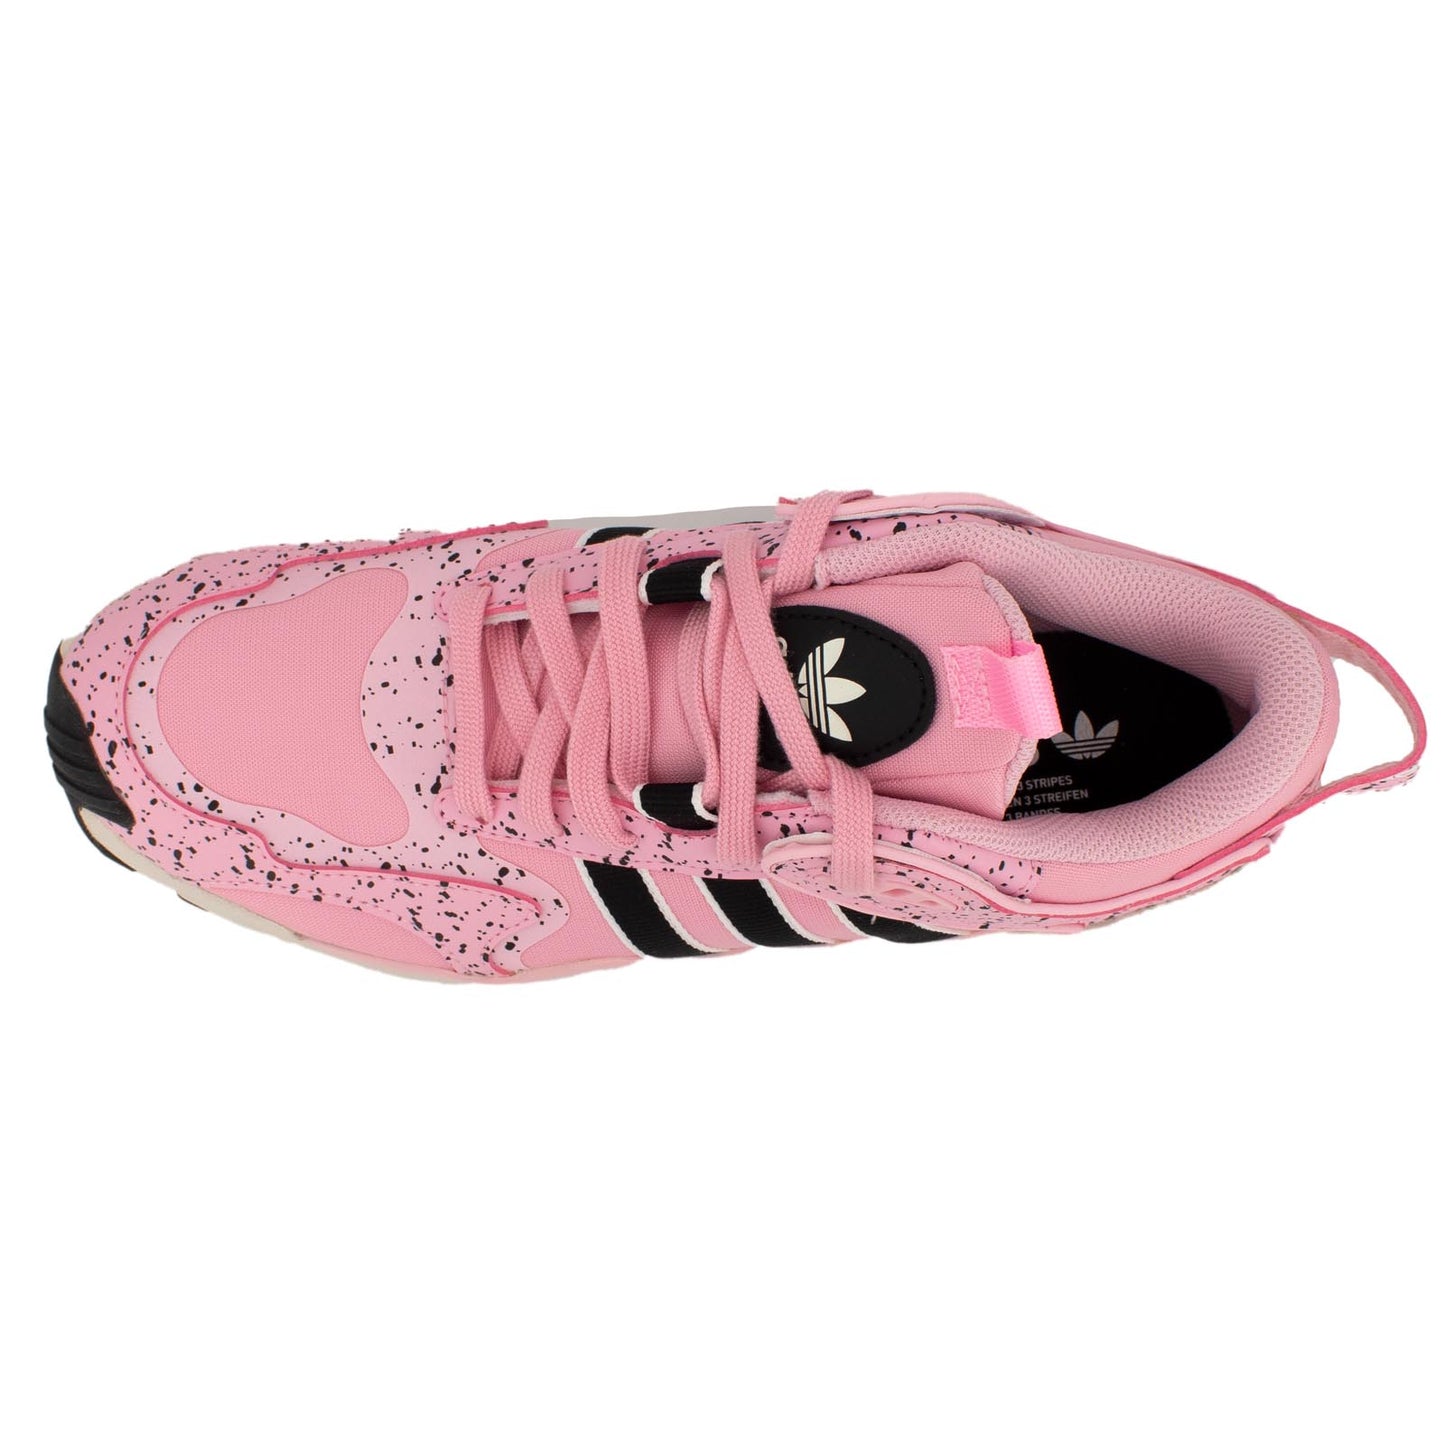 Adidas Originals Magmur Runner Sneaker Schuhe Damen Rosa EF9000